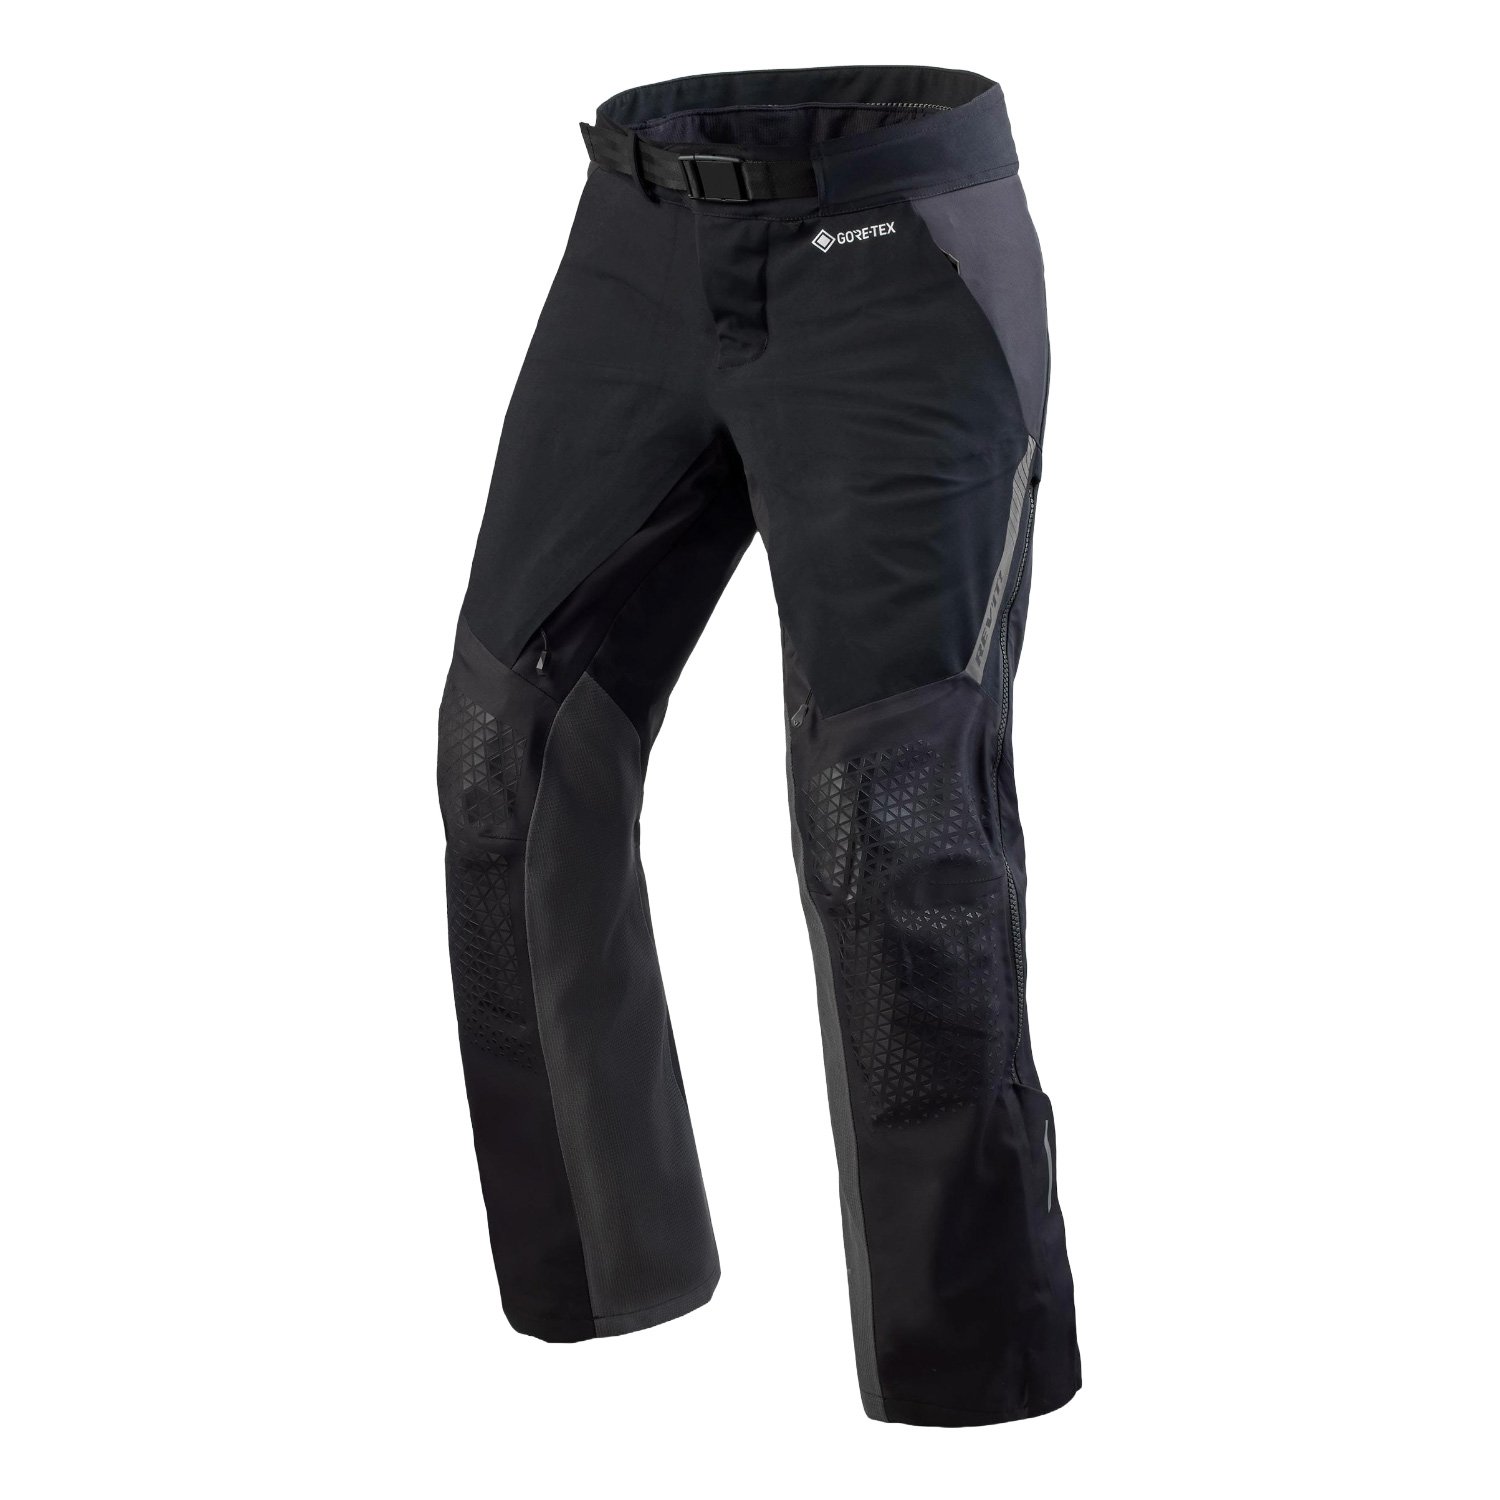 Image of REV'IT! Stratum GTX Black Grey Short Motorcycle Pants Size L ID 8700001351218